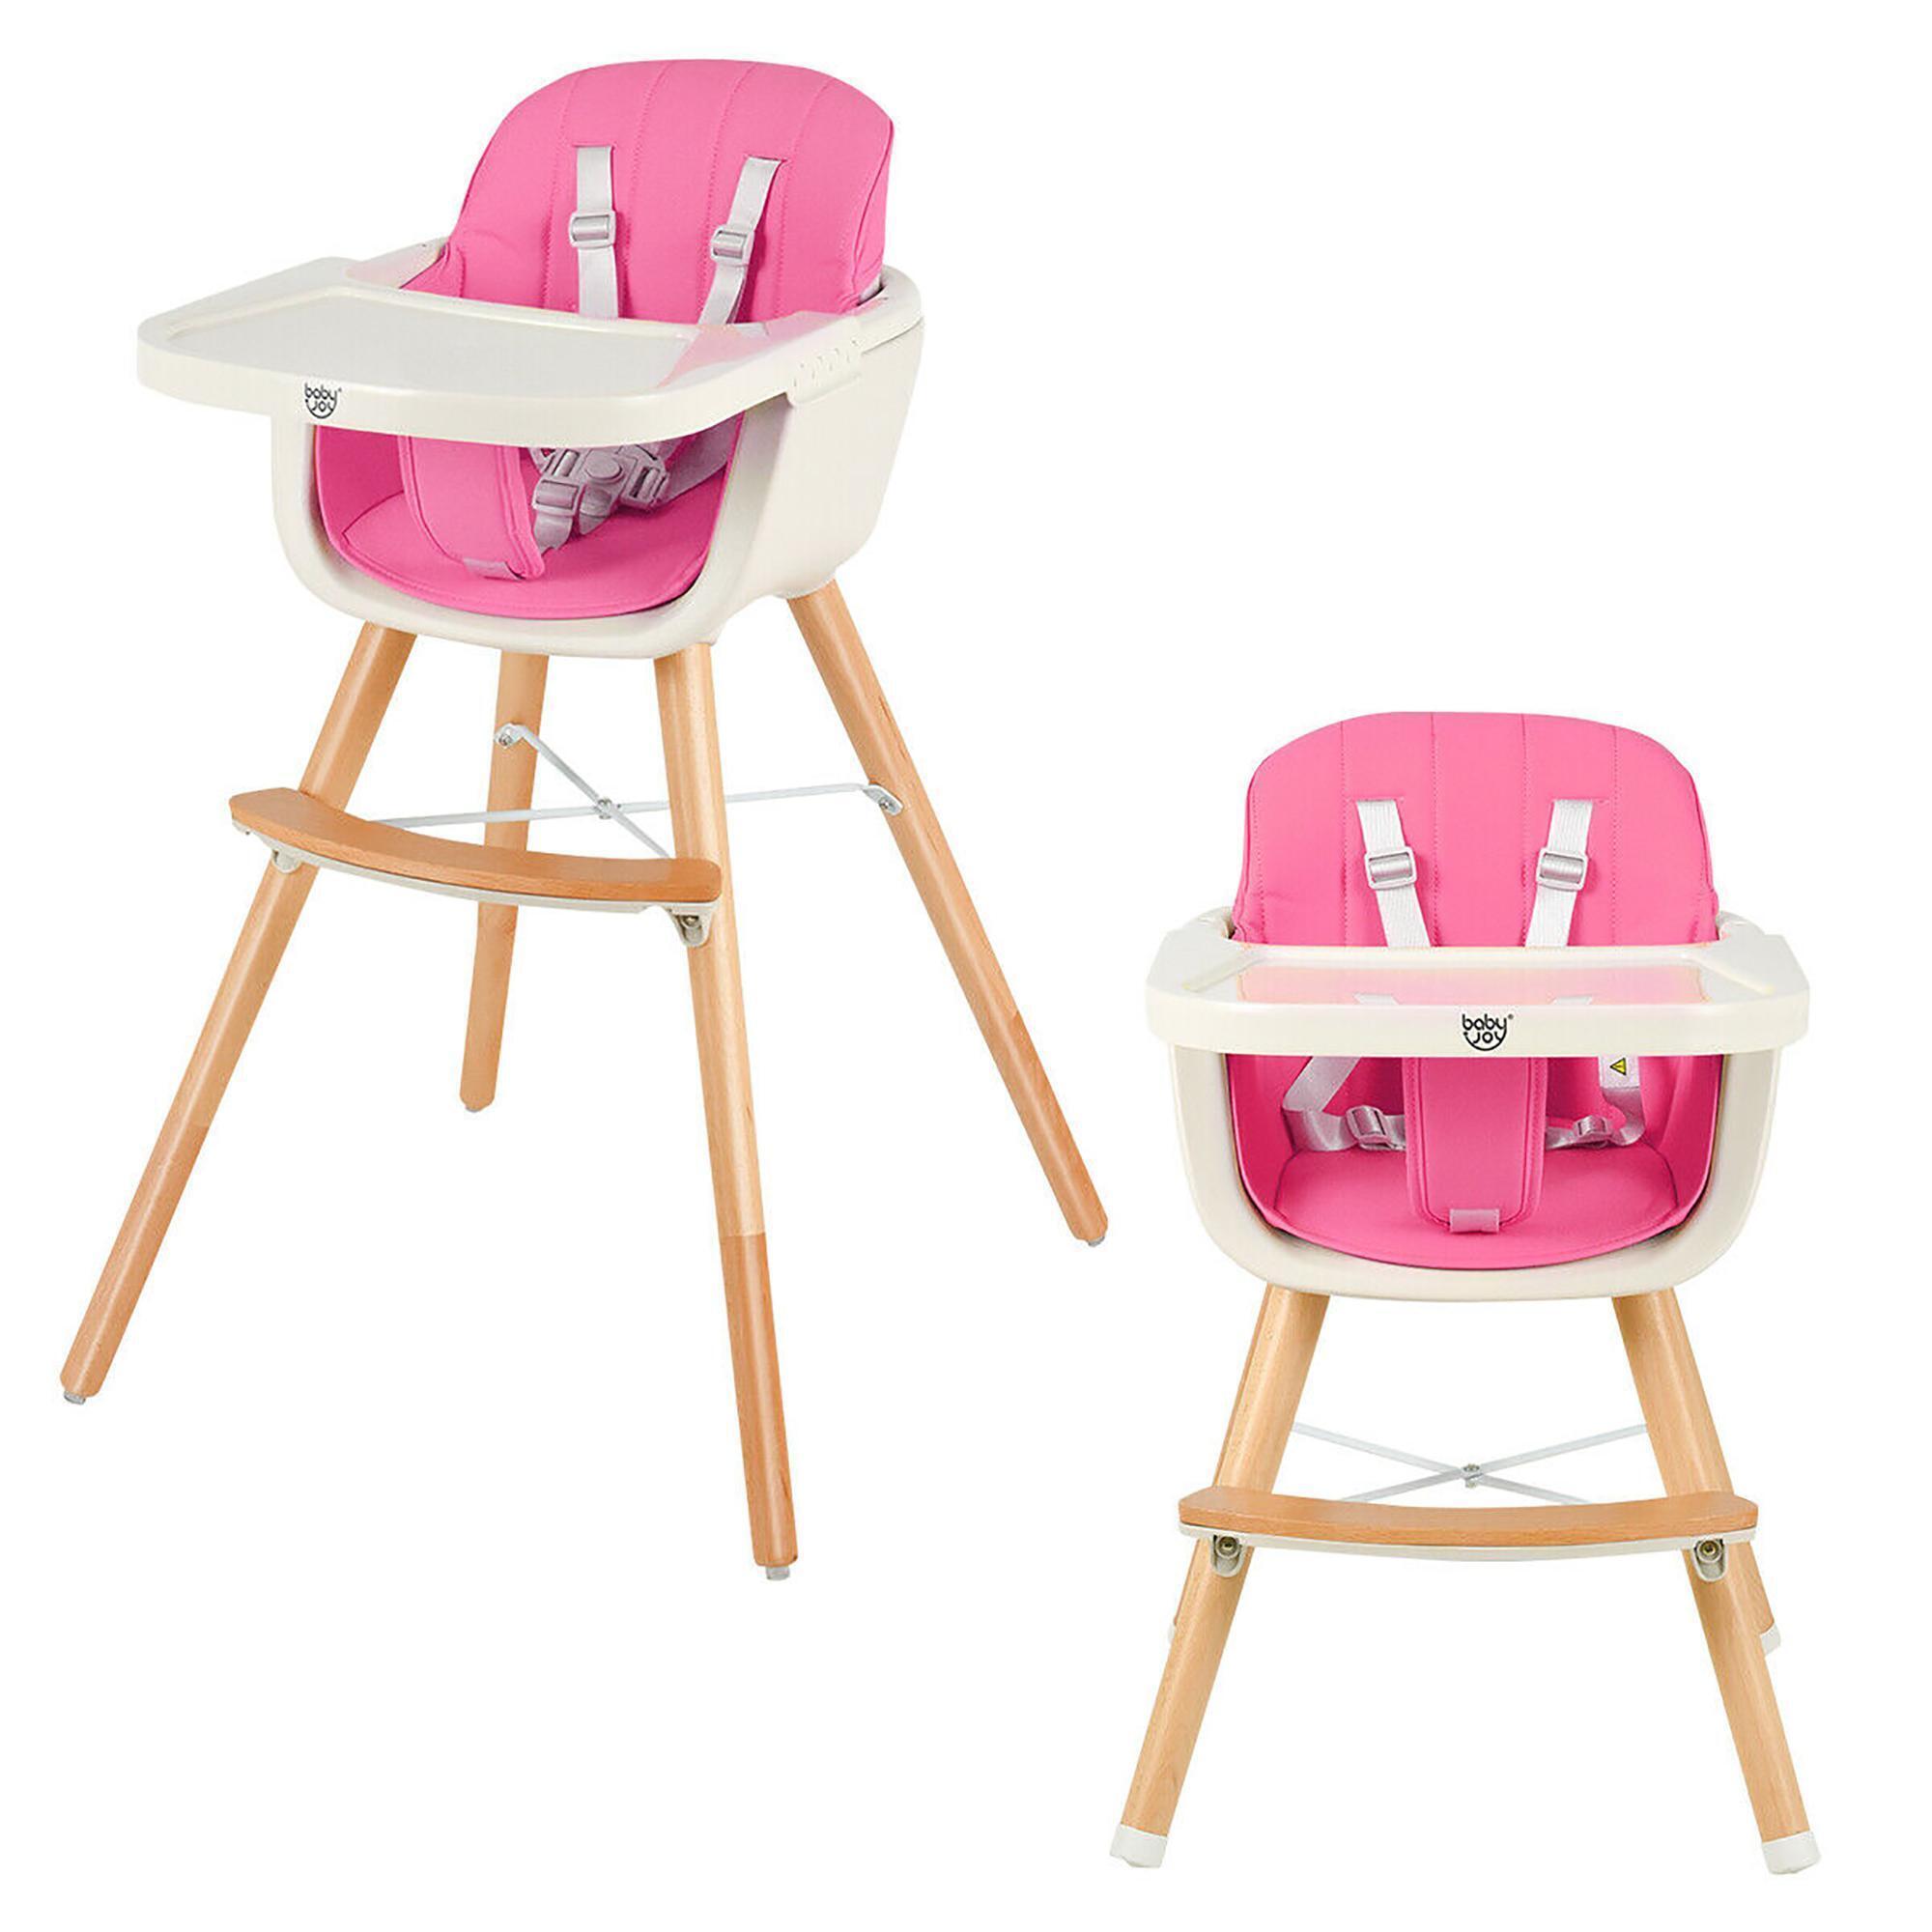 Babyjoy 3 in 1 Convertible Wooden High Chair Baby Toddler Highchair w/ Cushion GrayBeigeYellow alternate image